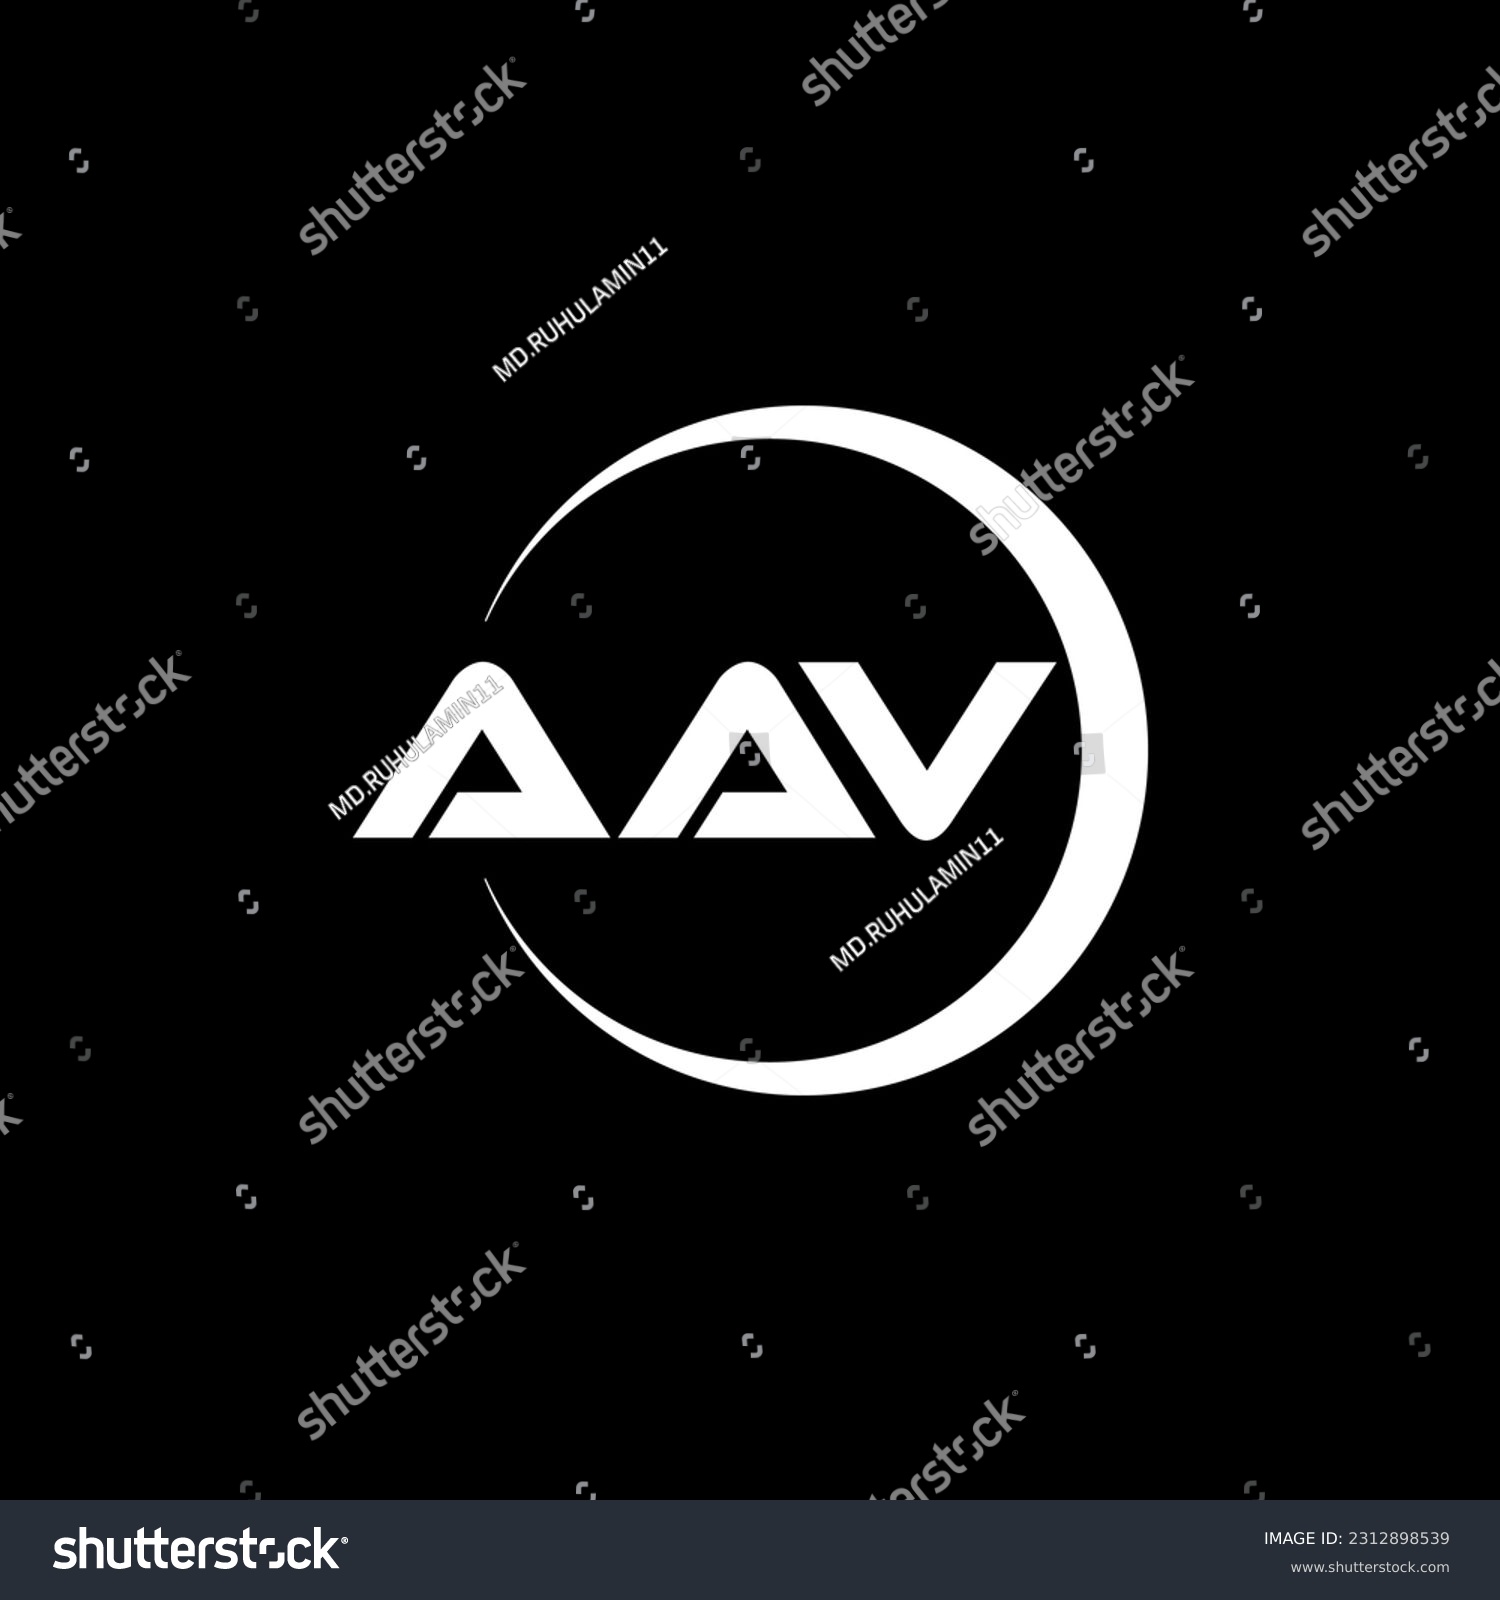 SVG of AAV letter logo design in illustration. Vector logo, calligraphy designs for logo, Poster, Invitation, etc. svg